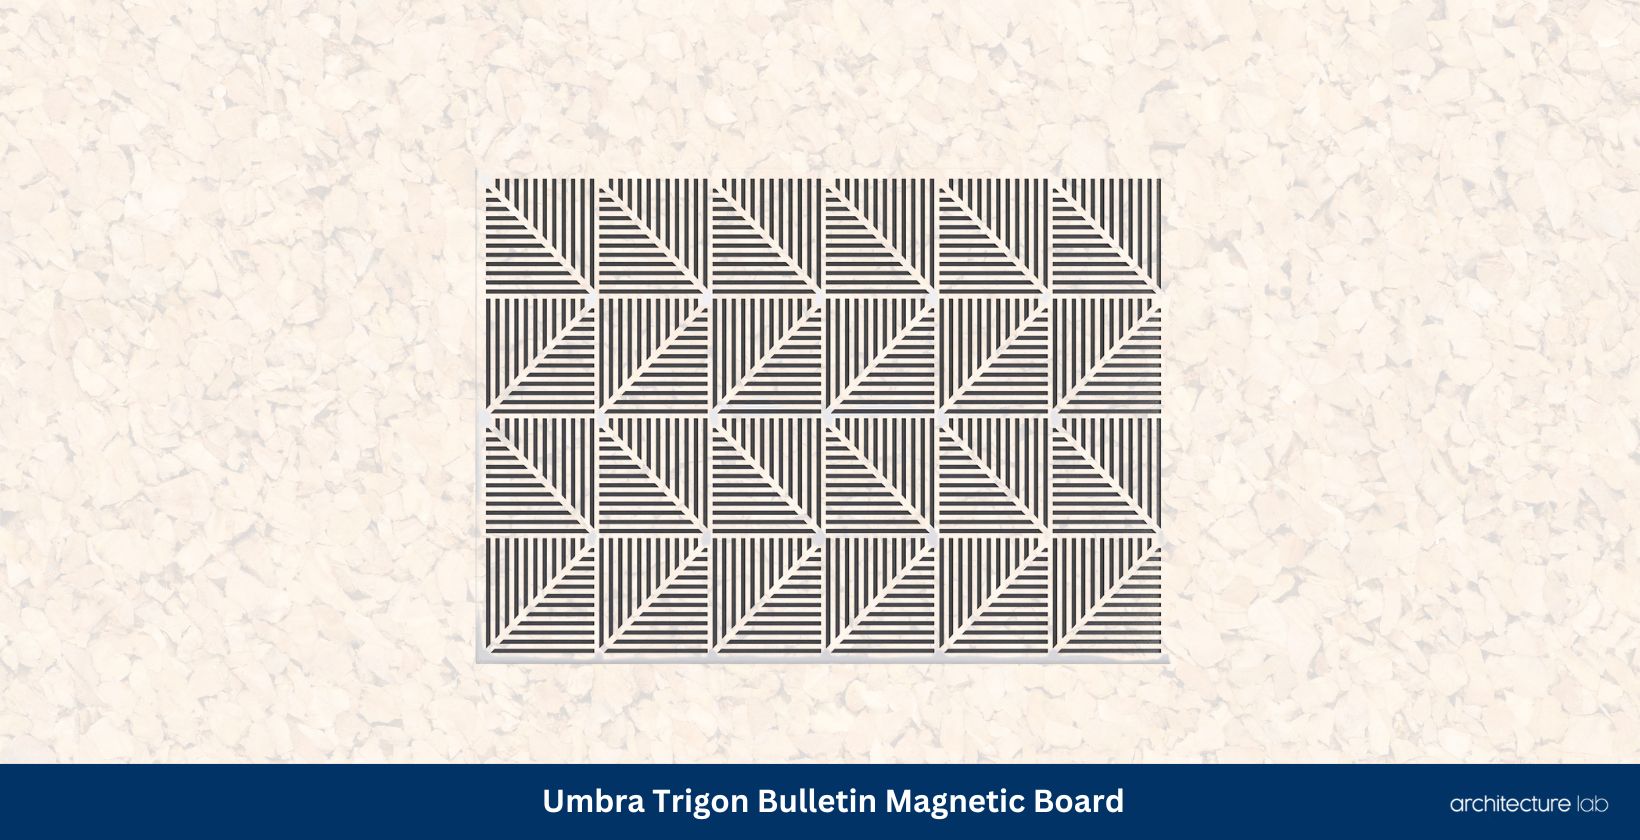 Umbra trigon bulletin magnetic board